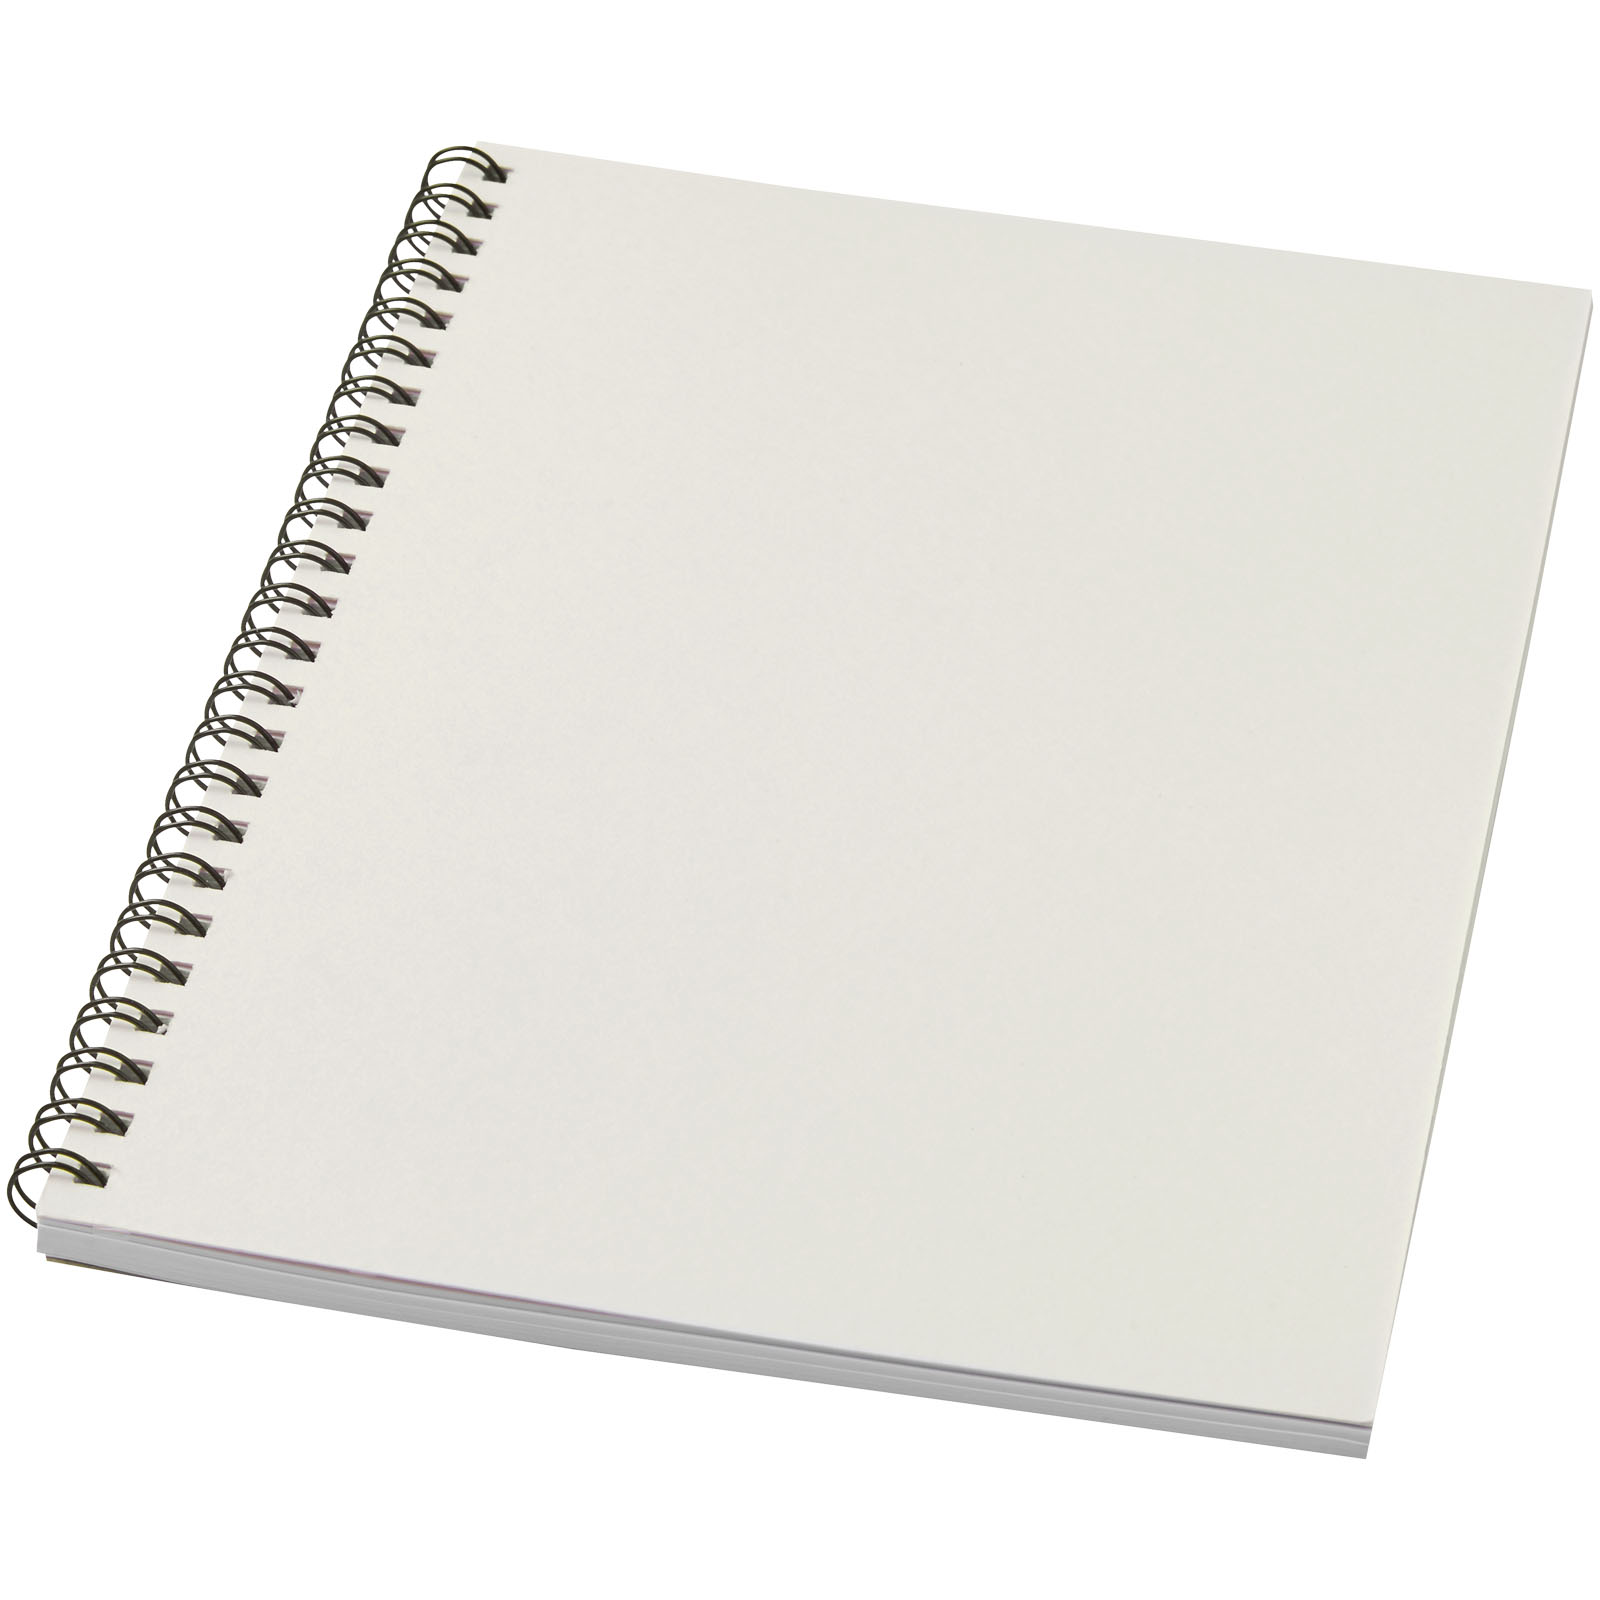 Soft cover notebooks - Desk-Mate® A5 colour spiral notebook